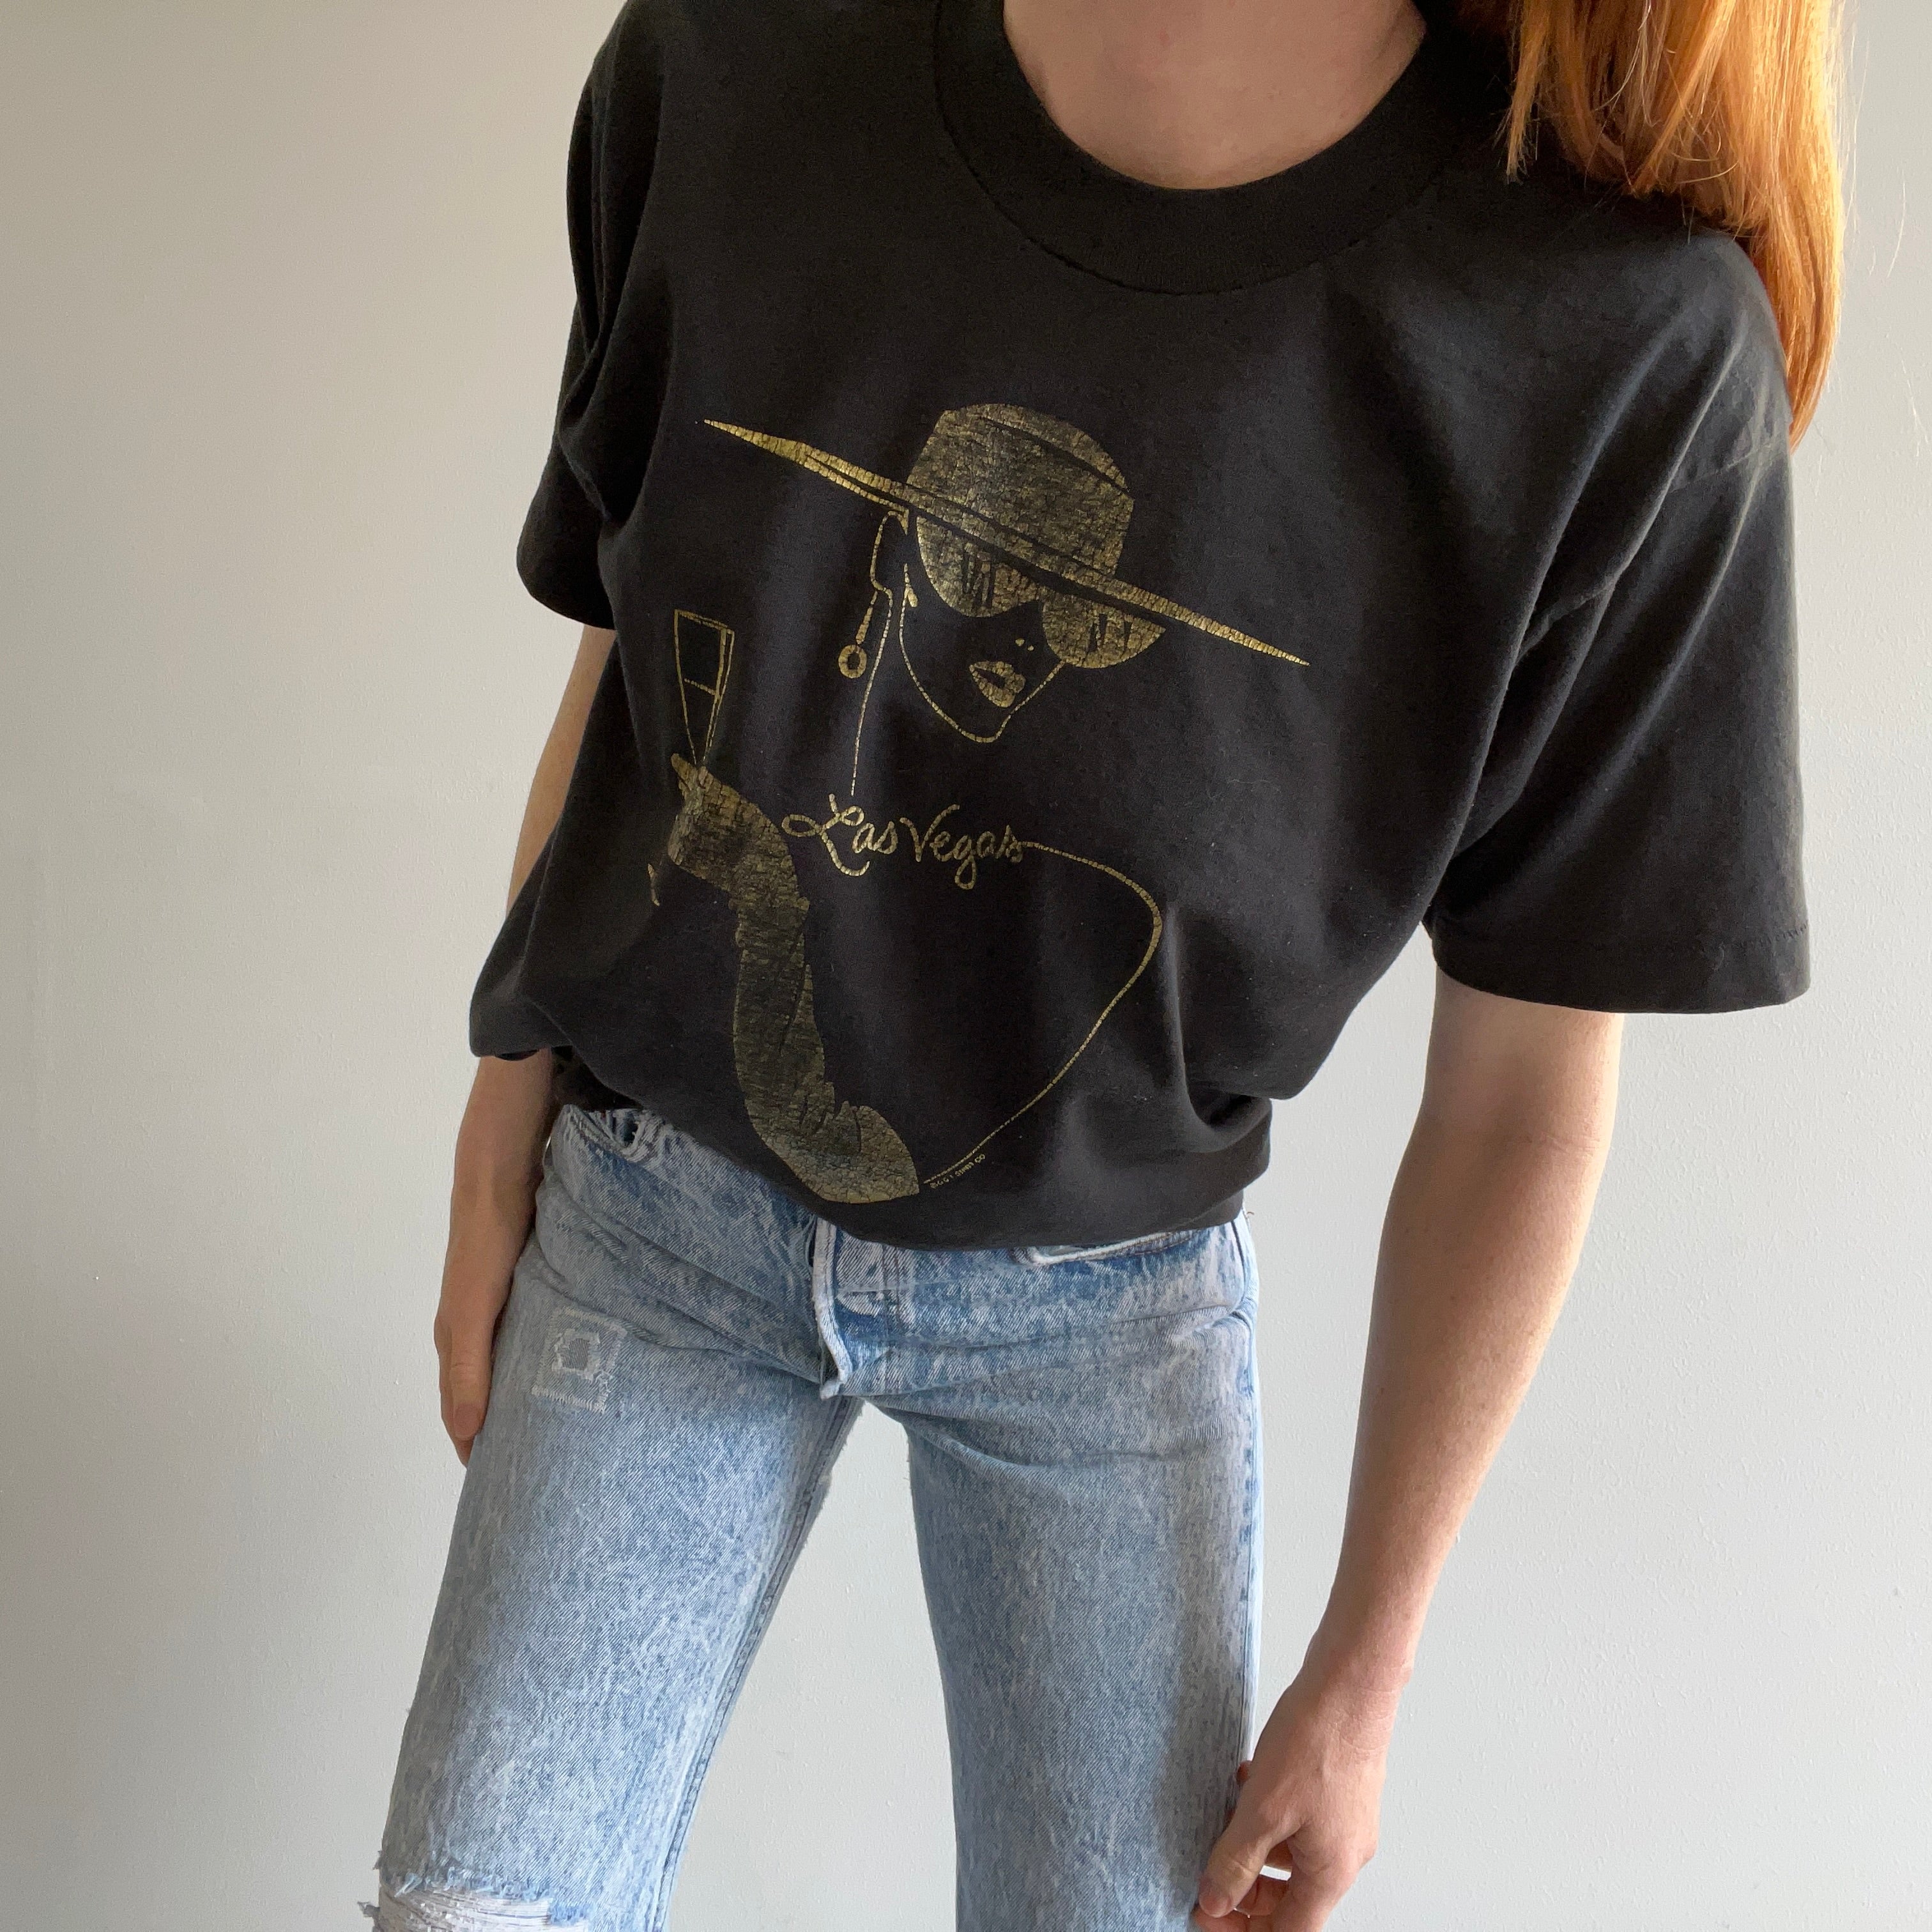 1980s Black & Gold Las Vegas Tourist T-Shirt - WOWZA